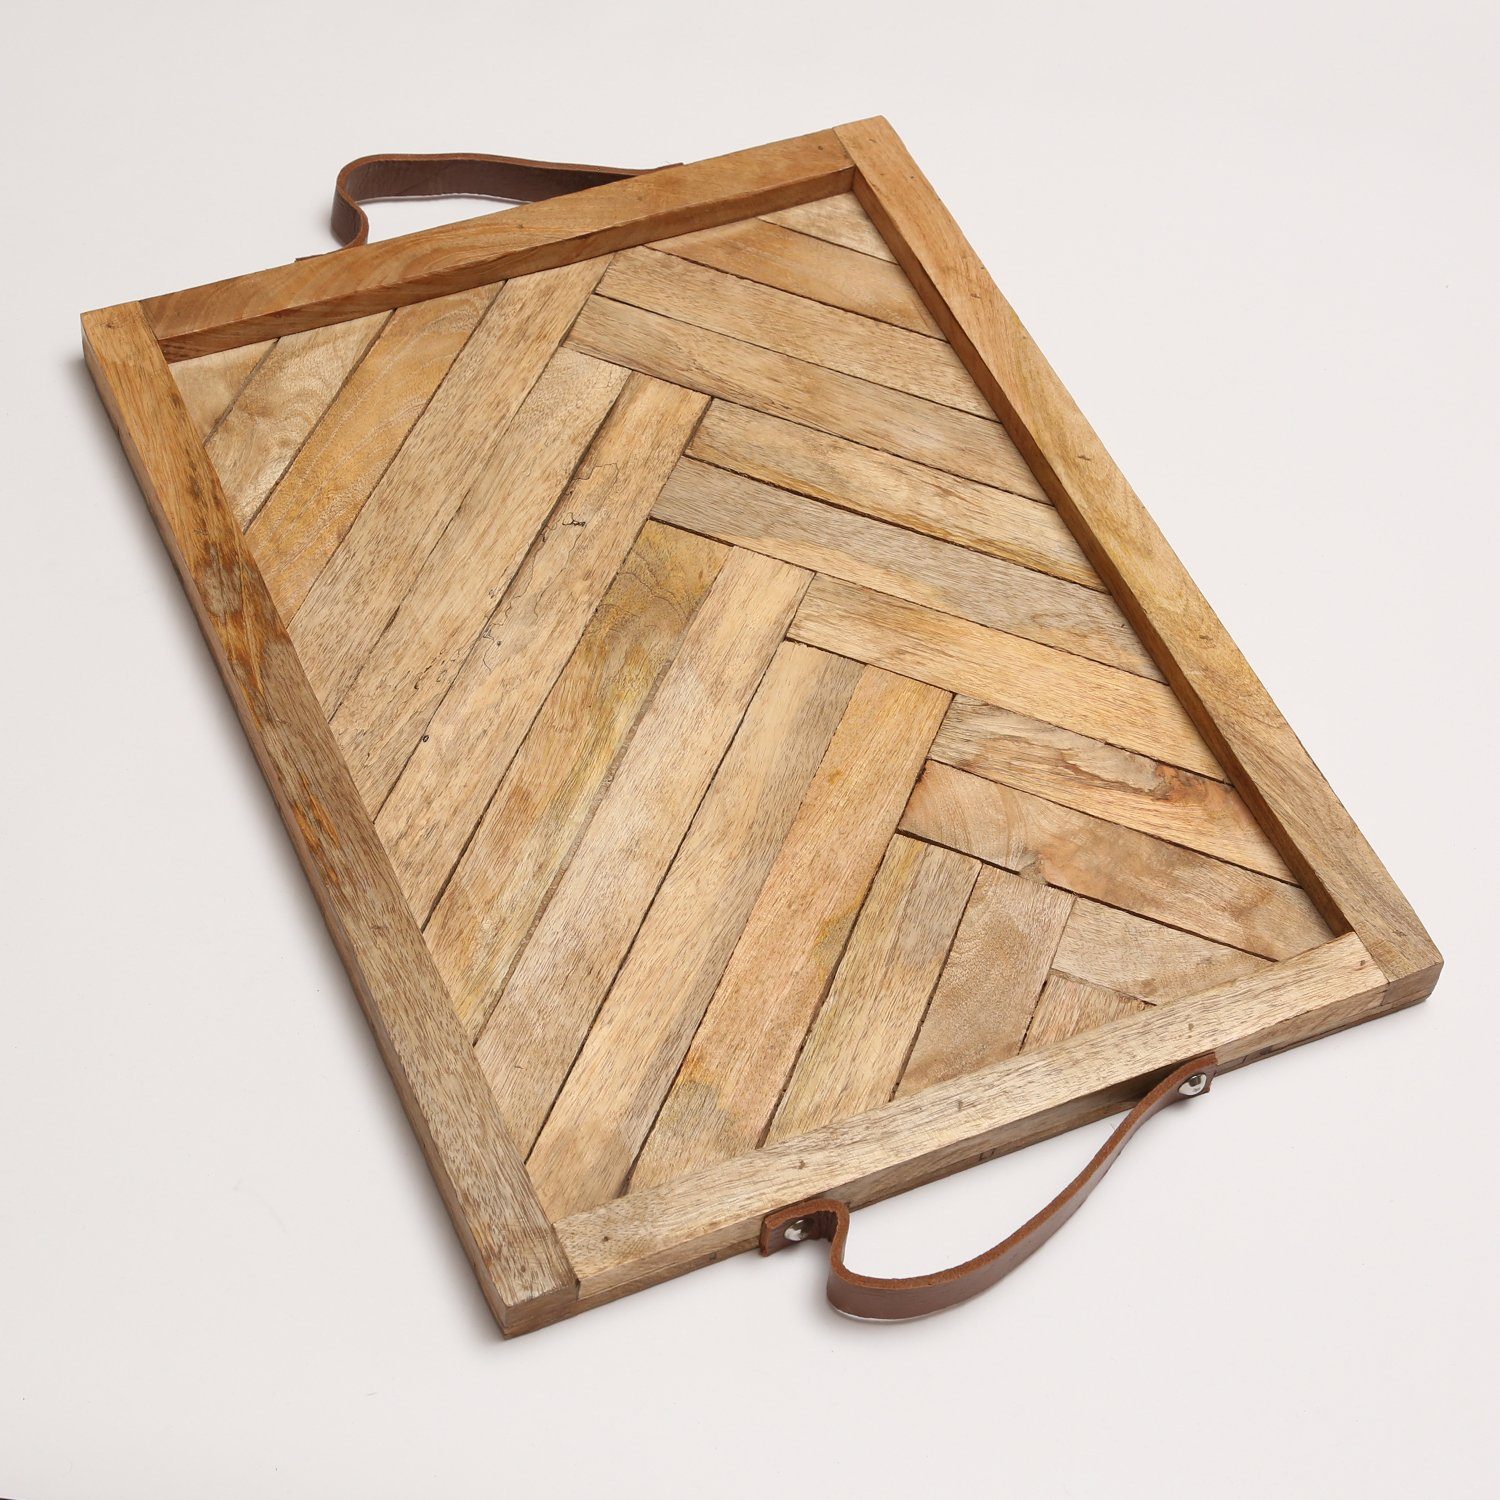 MARELIDA Dekotablett Tablett Holz Kerzentablett Serviertablett rechteckig Mangoholz 41cm